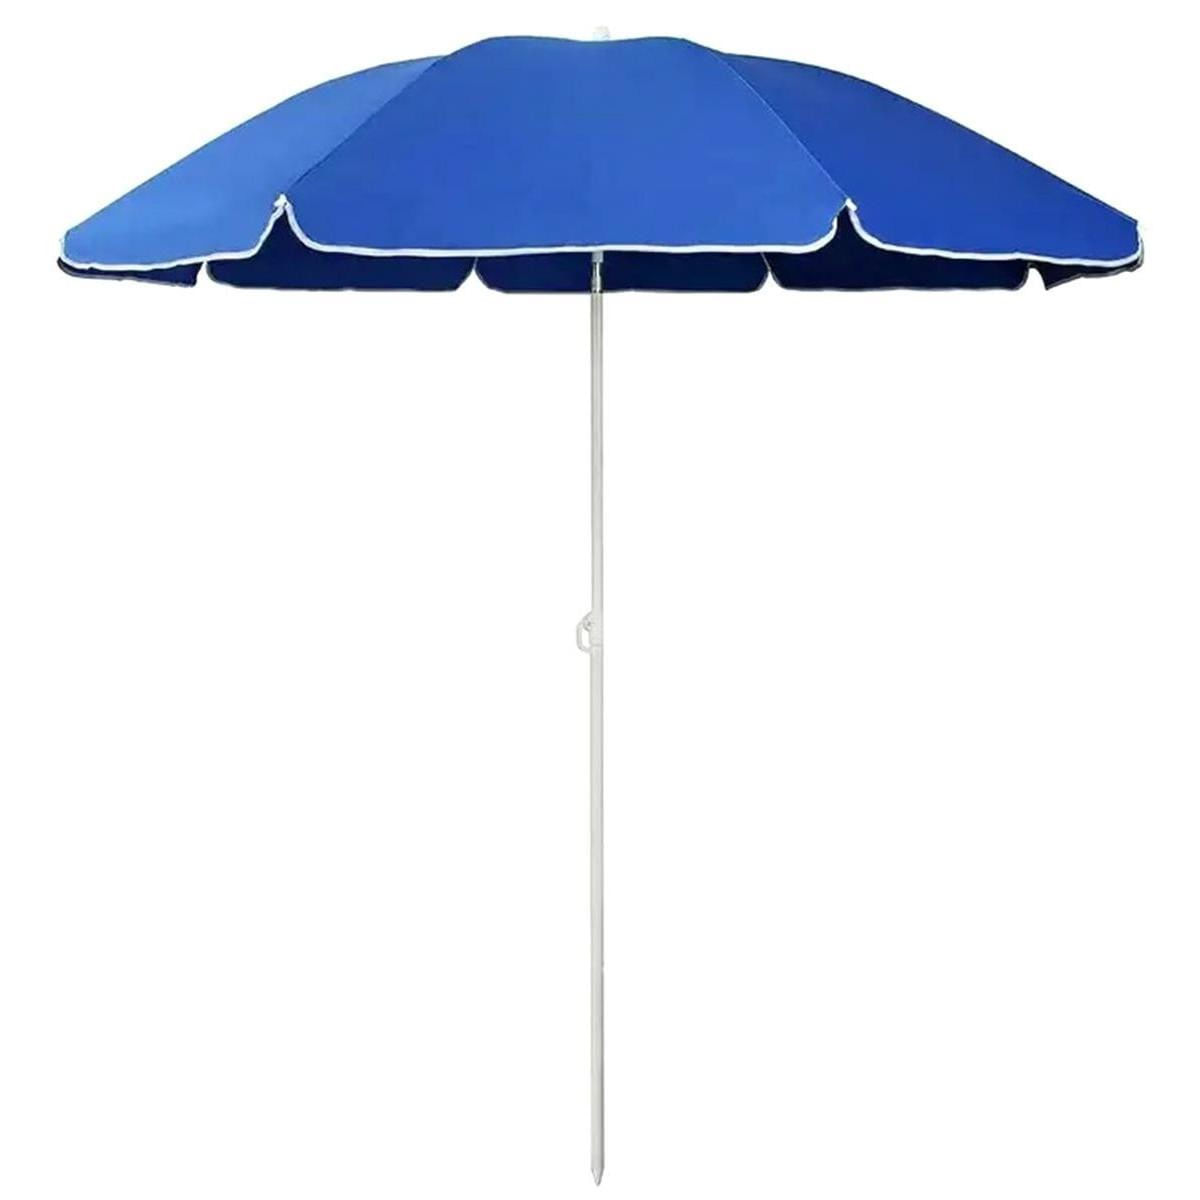 Umbrela de Plaja sau Gradina, albastra, model XL cu deschidere de pana la 160 cm